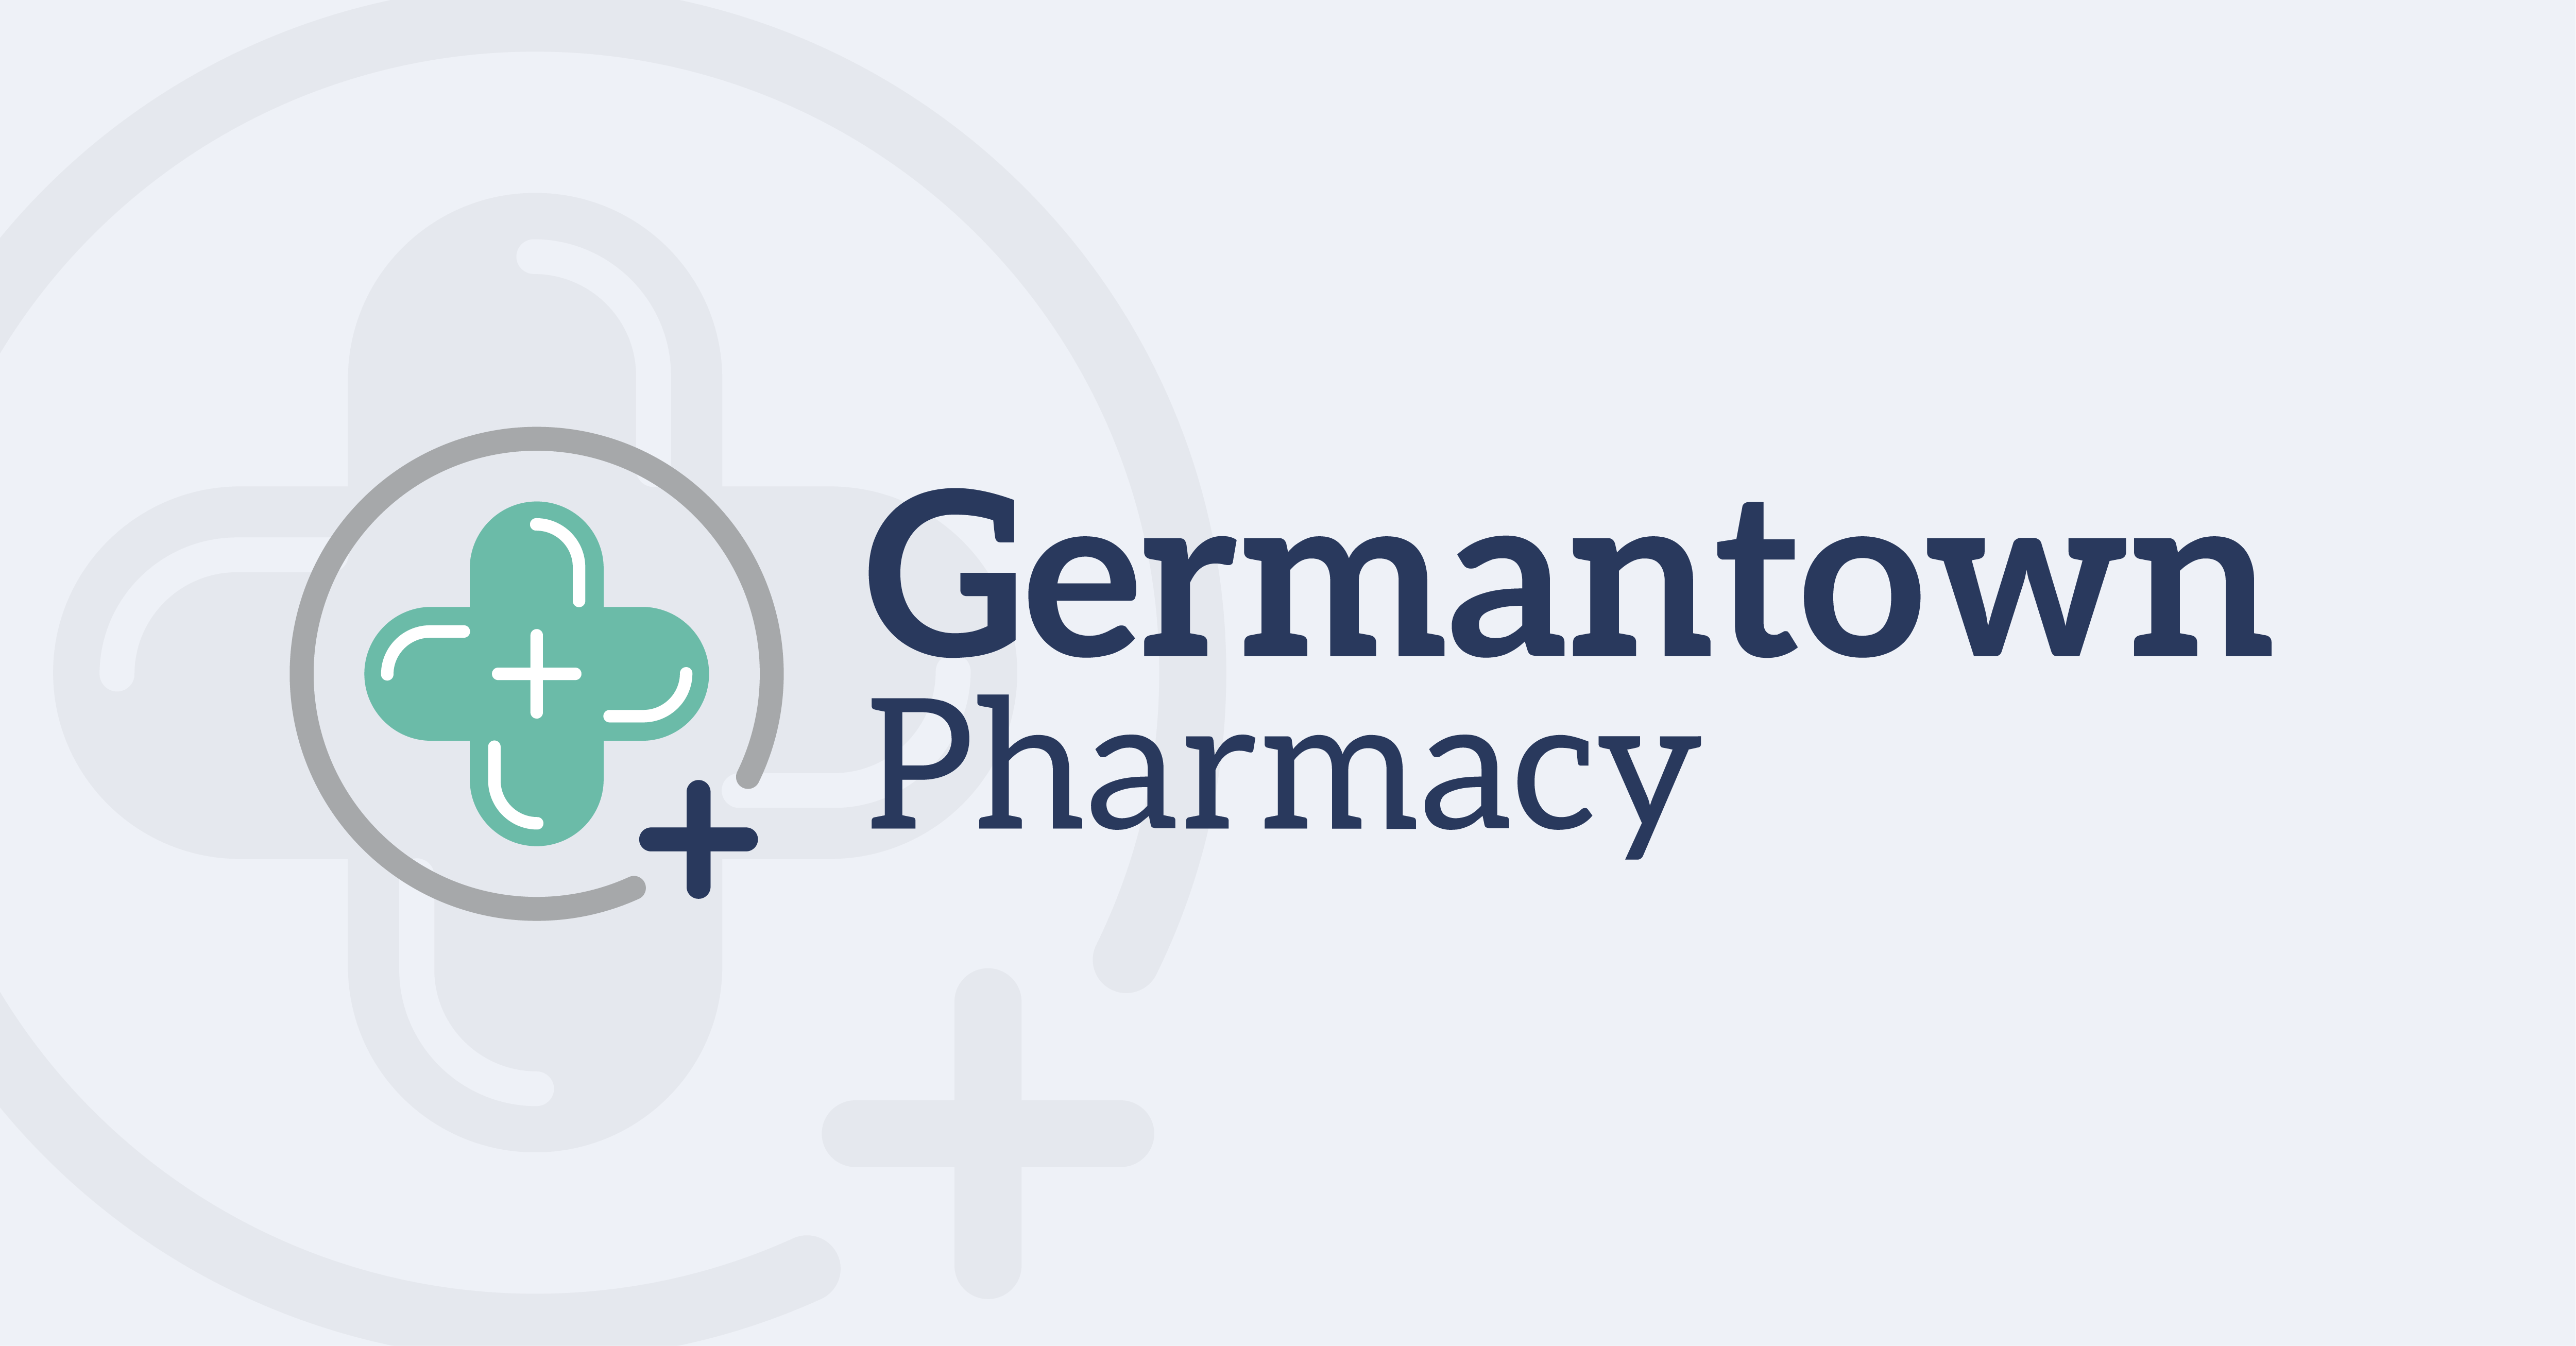 Germantown Pharmacy thumbnail